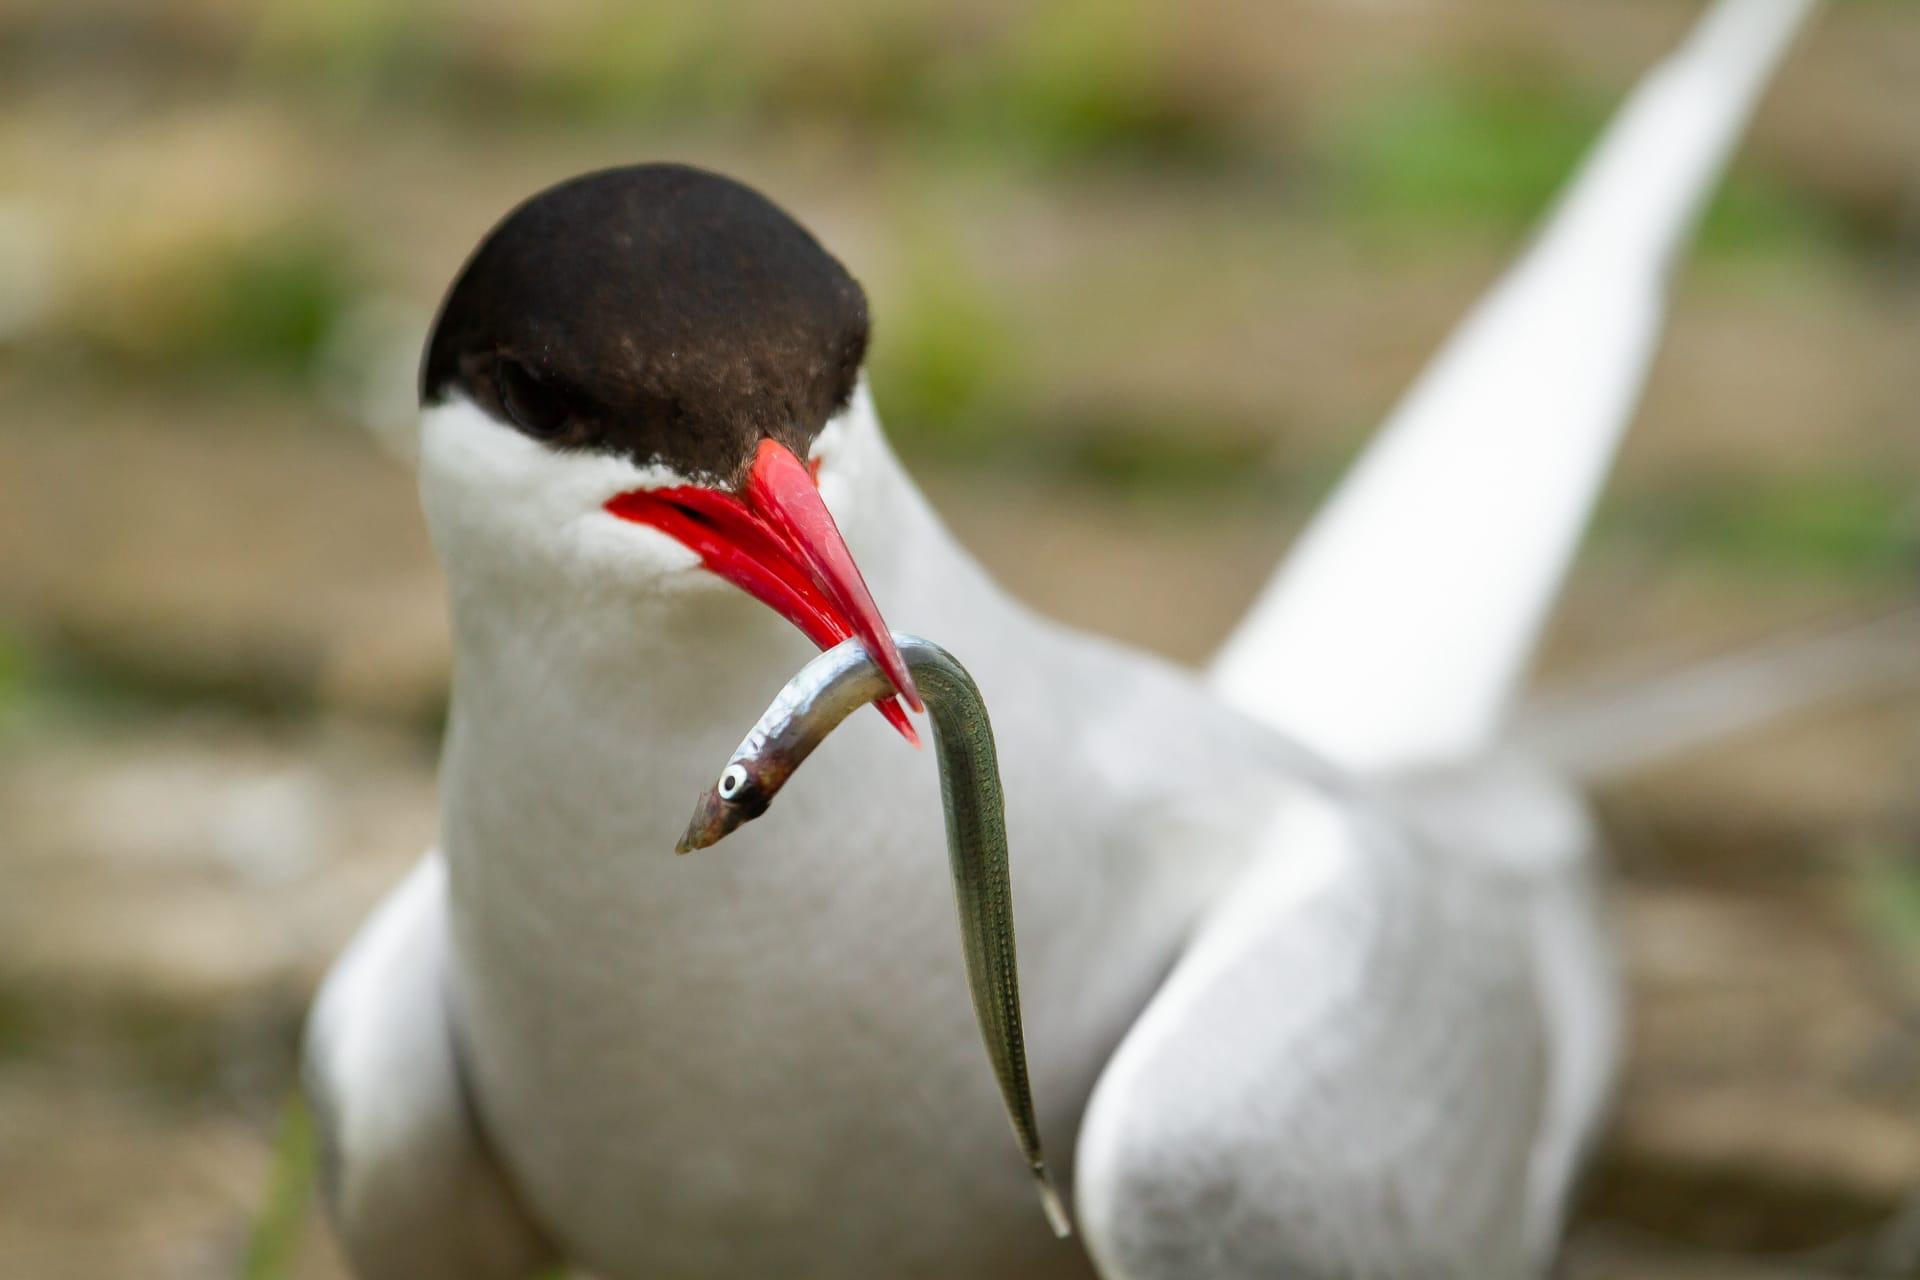 Arctic tern pictures